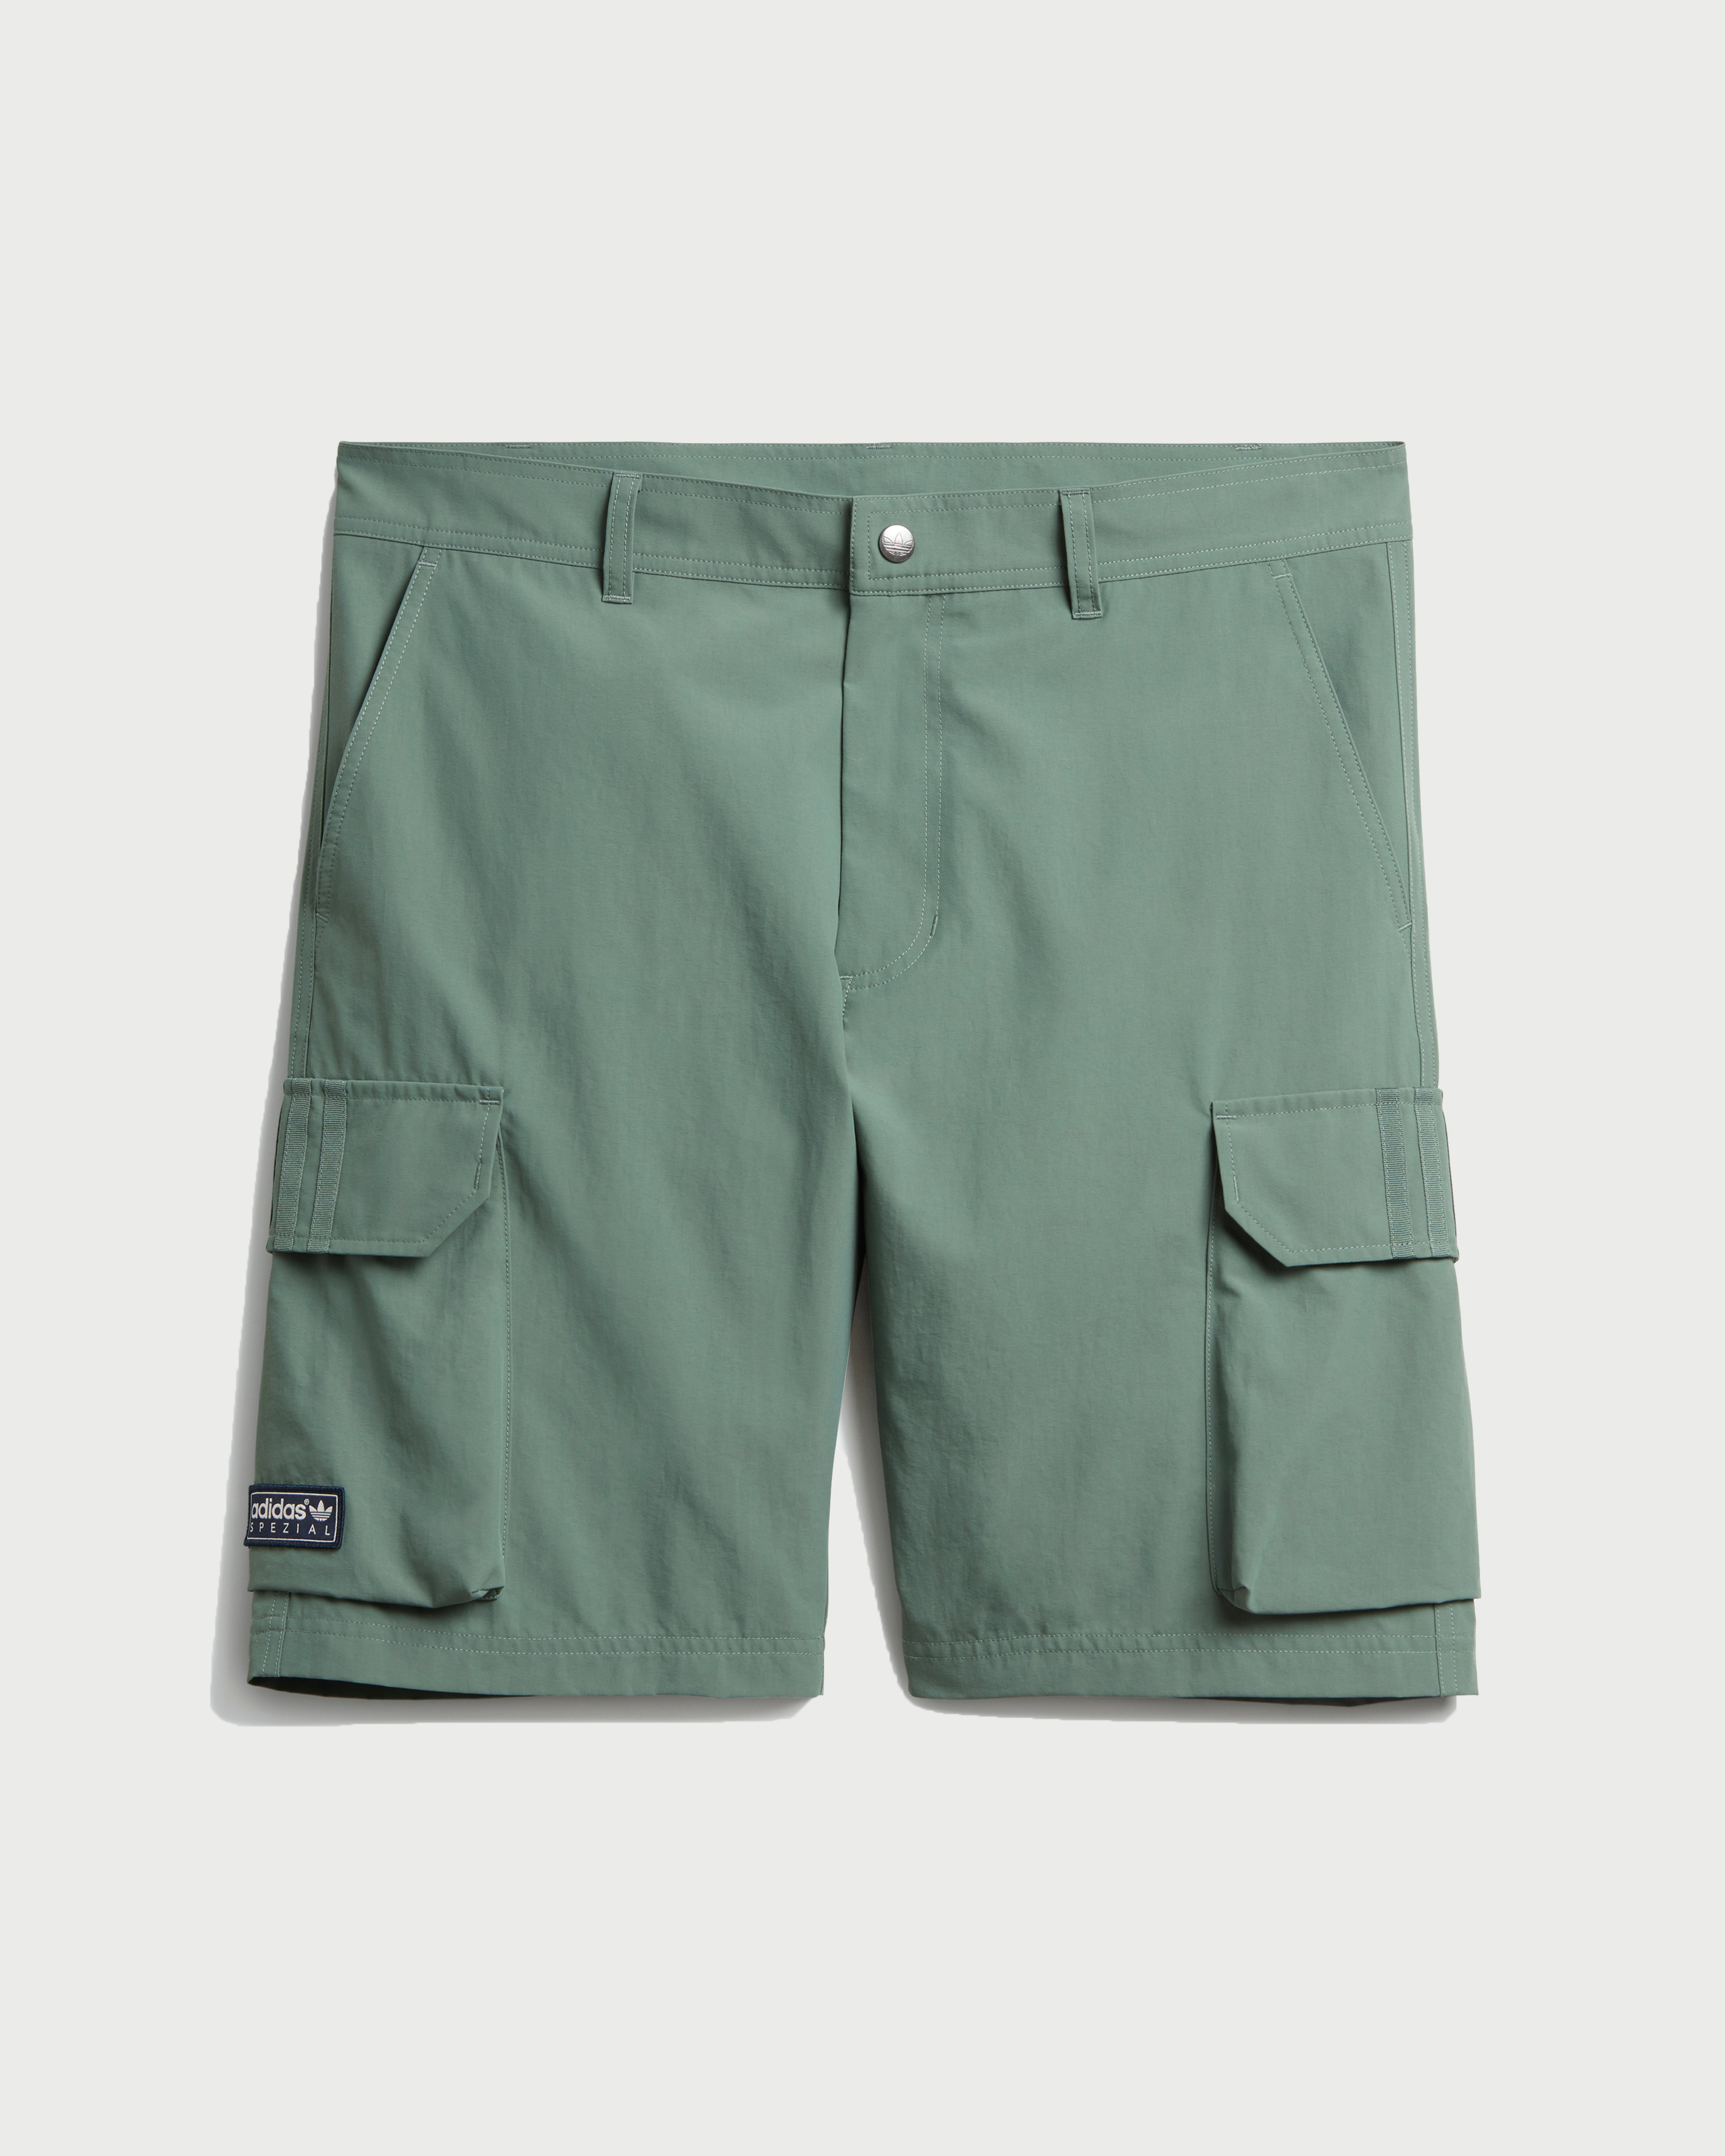 Adidas - Standish Shorts Spezial Green - Clothing - Green - Image 1